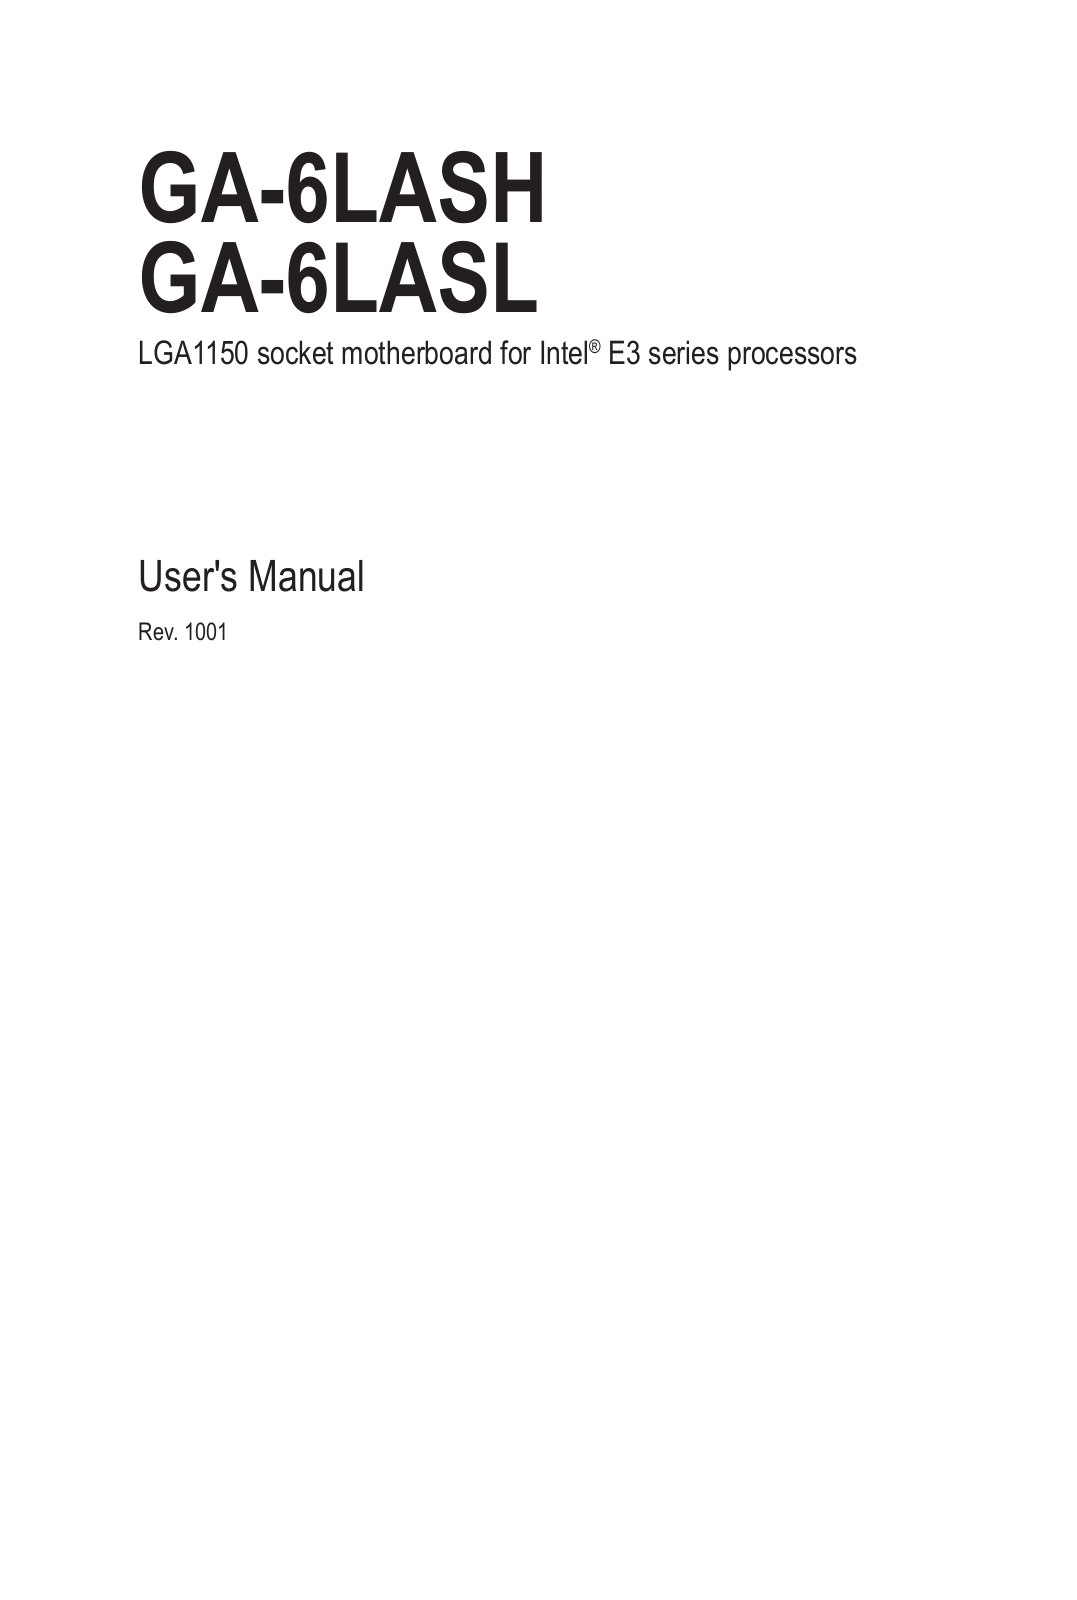 Gigabyte GA-6LASL, GA-6LASH Manual